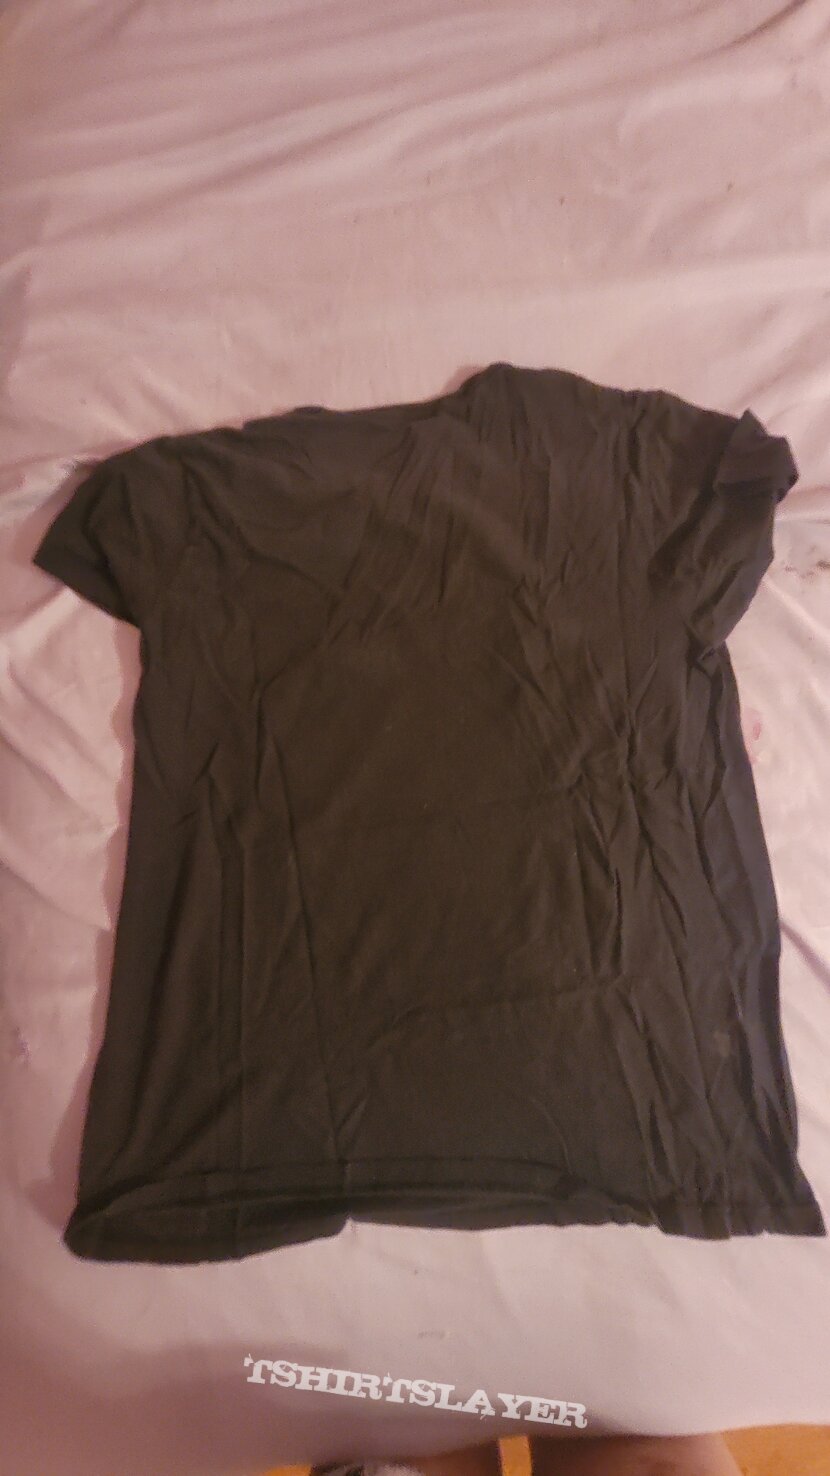 Ramones 2006 shirt from hot topic